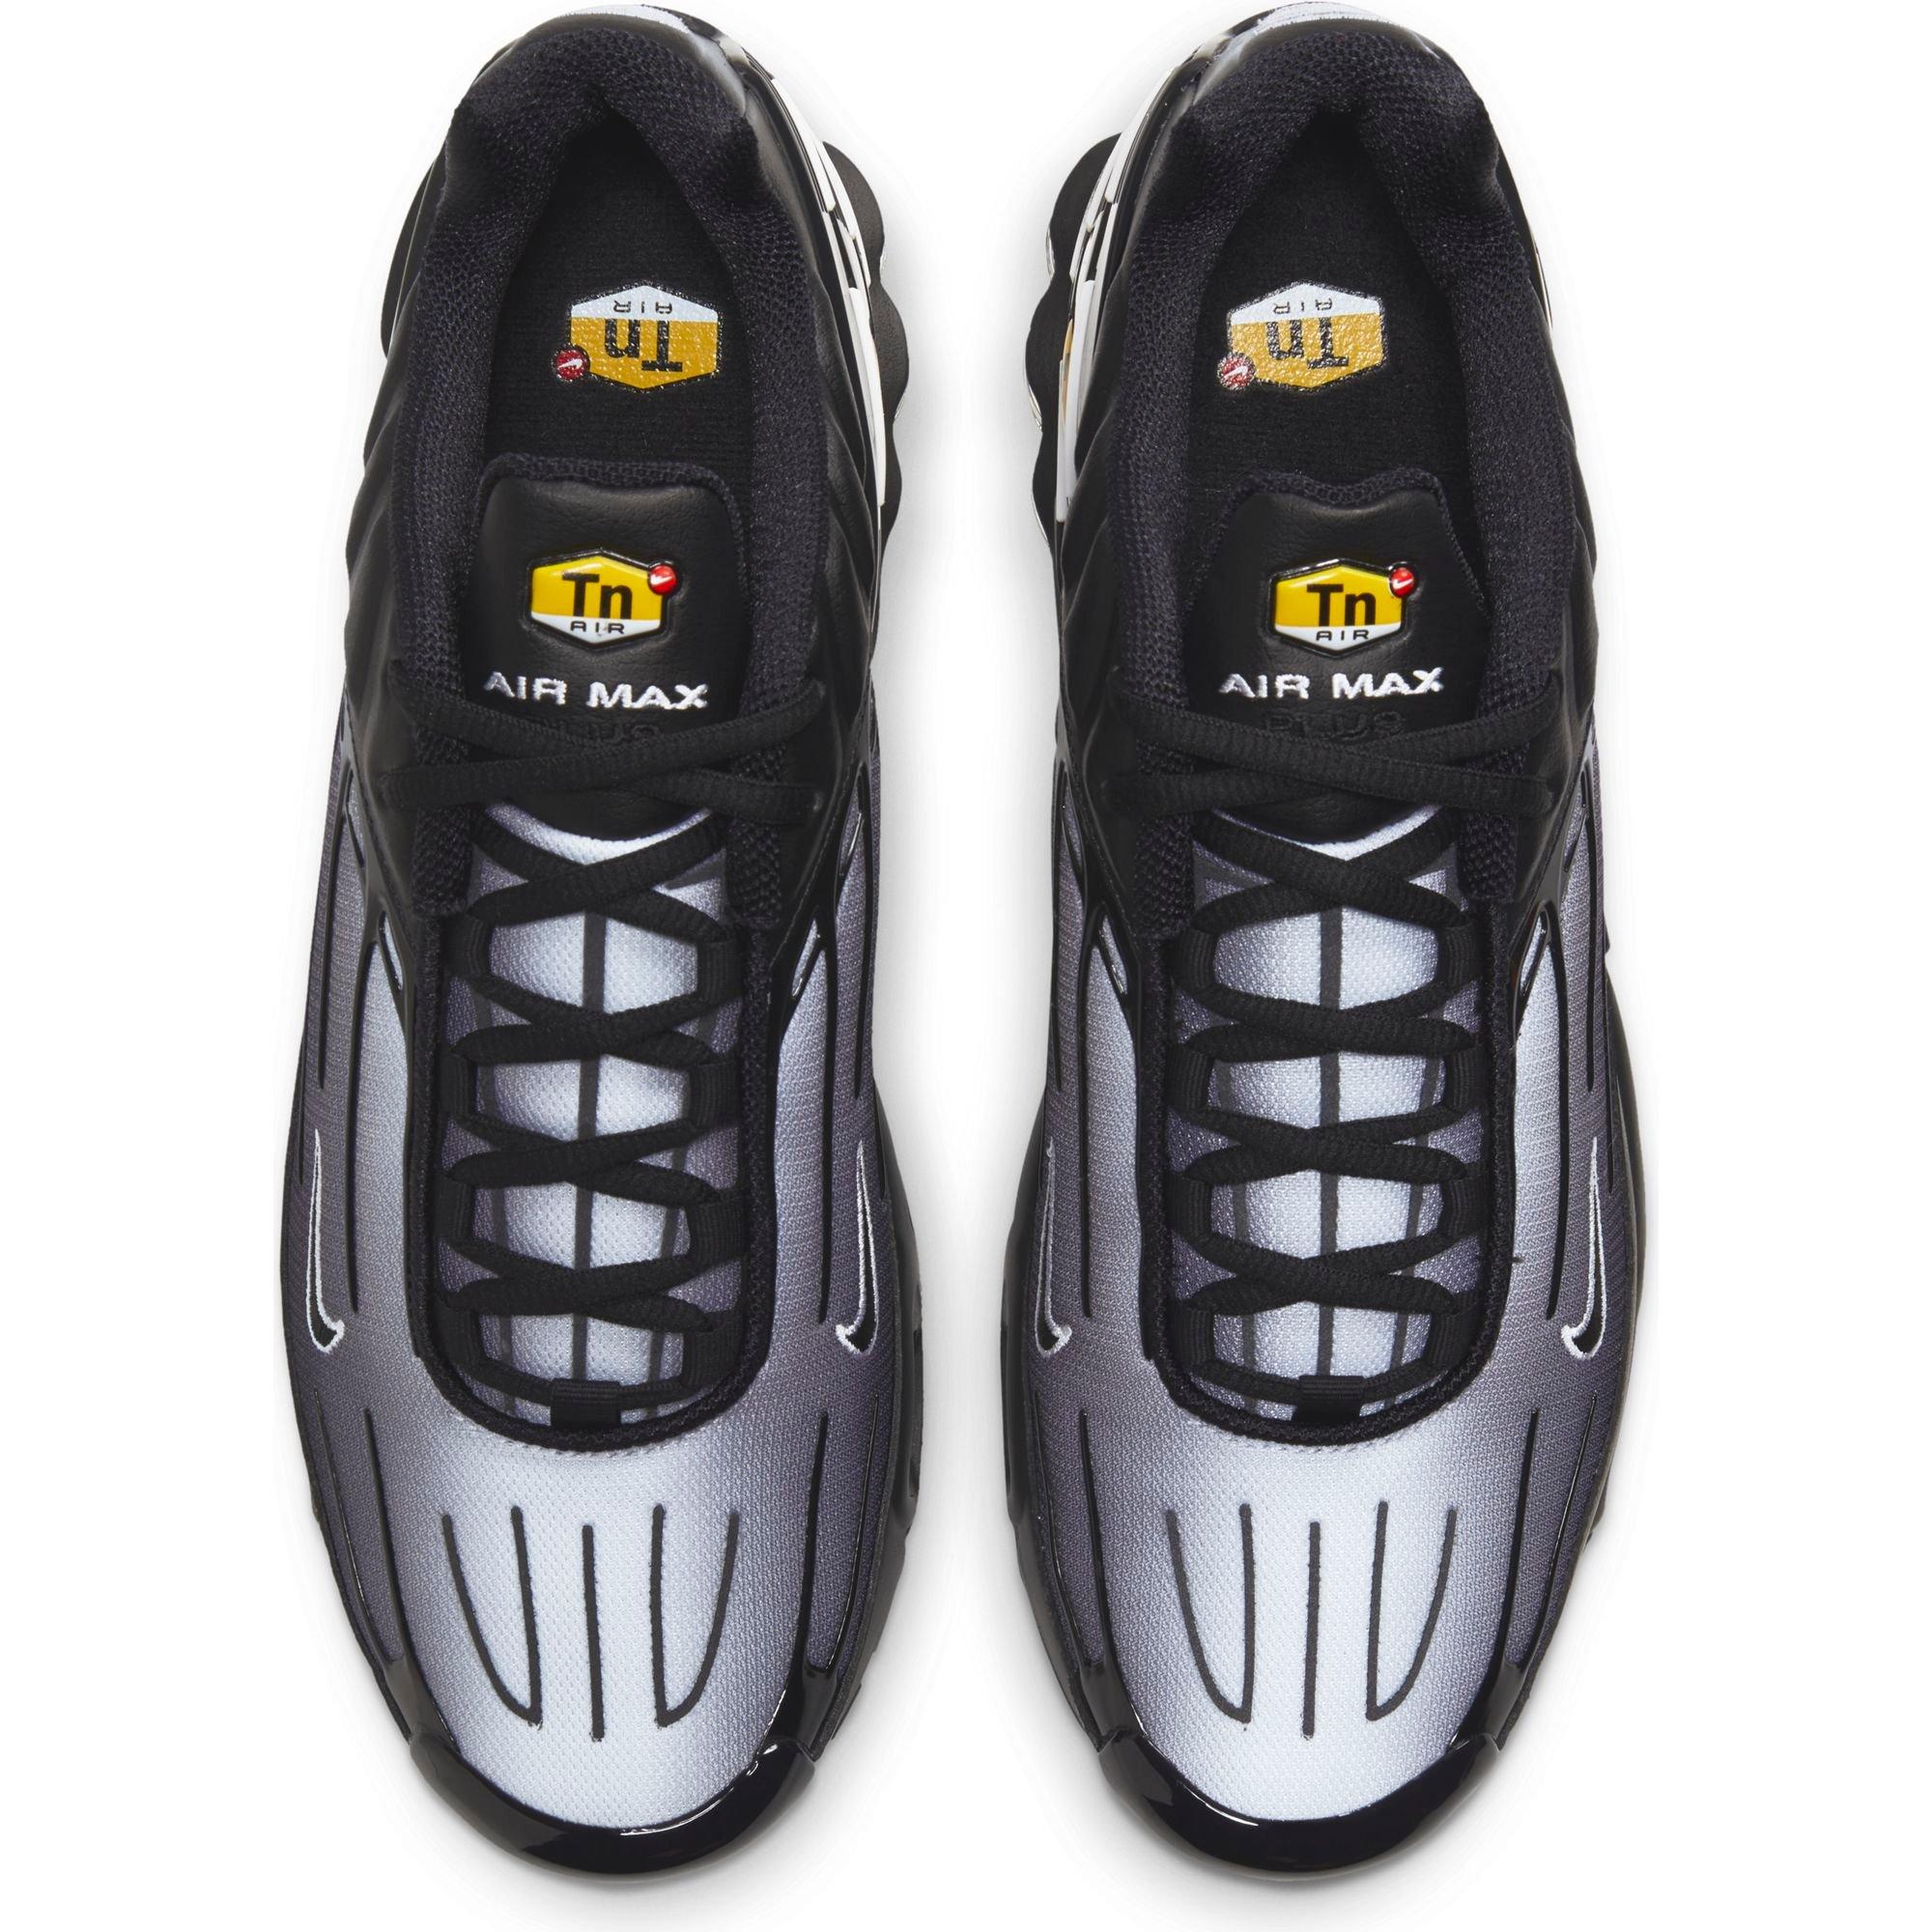 Nike Air Max Plus III "Black/Black/White" Shoe